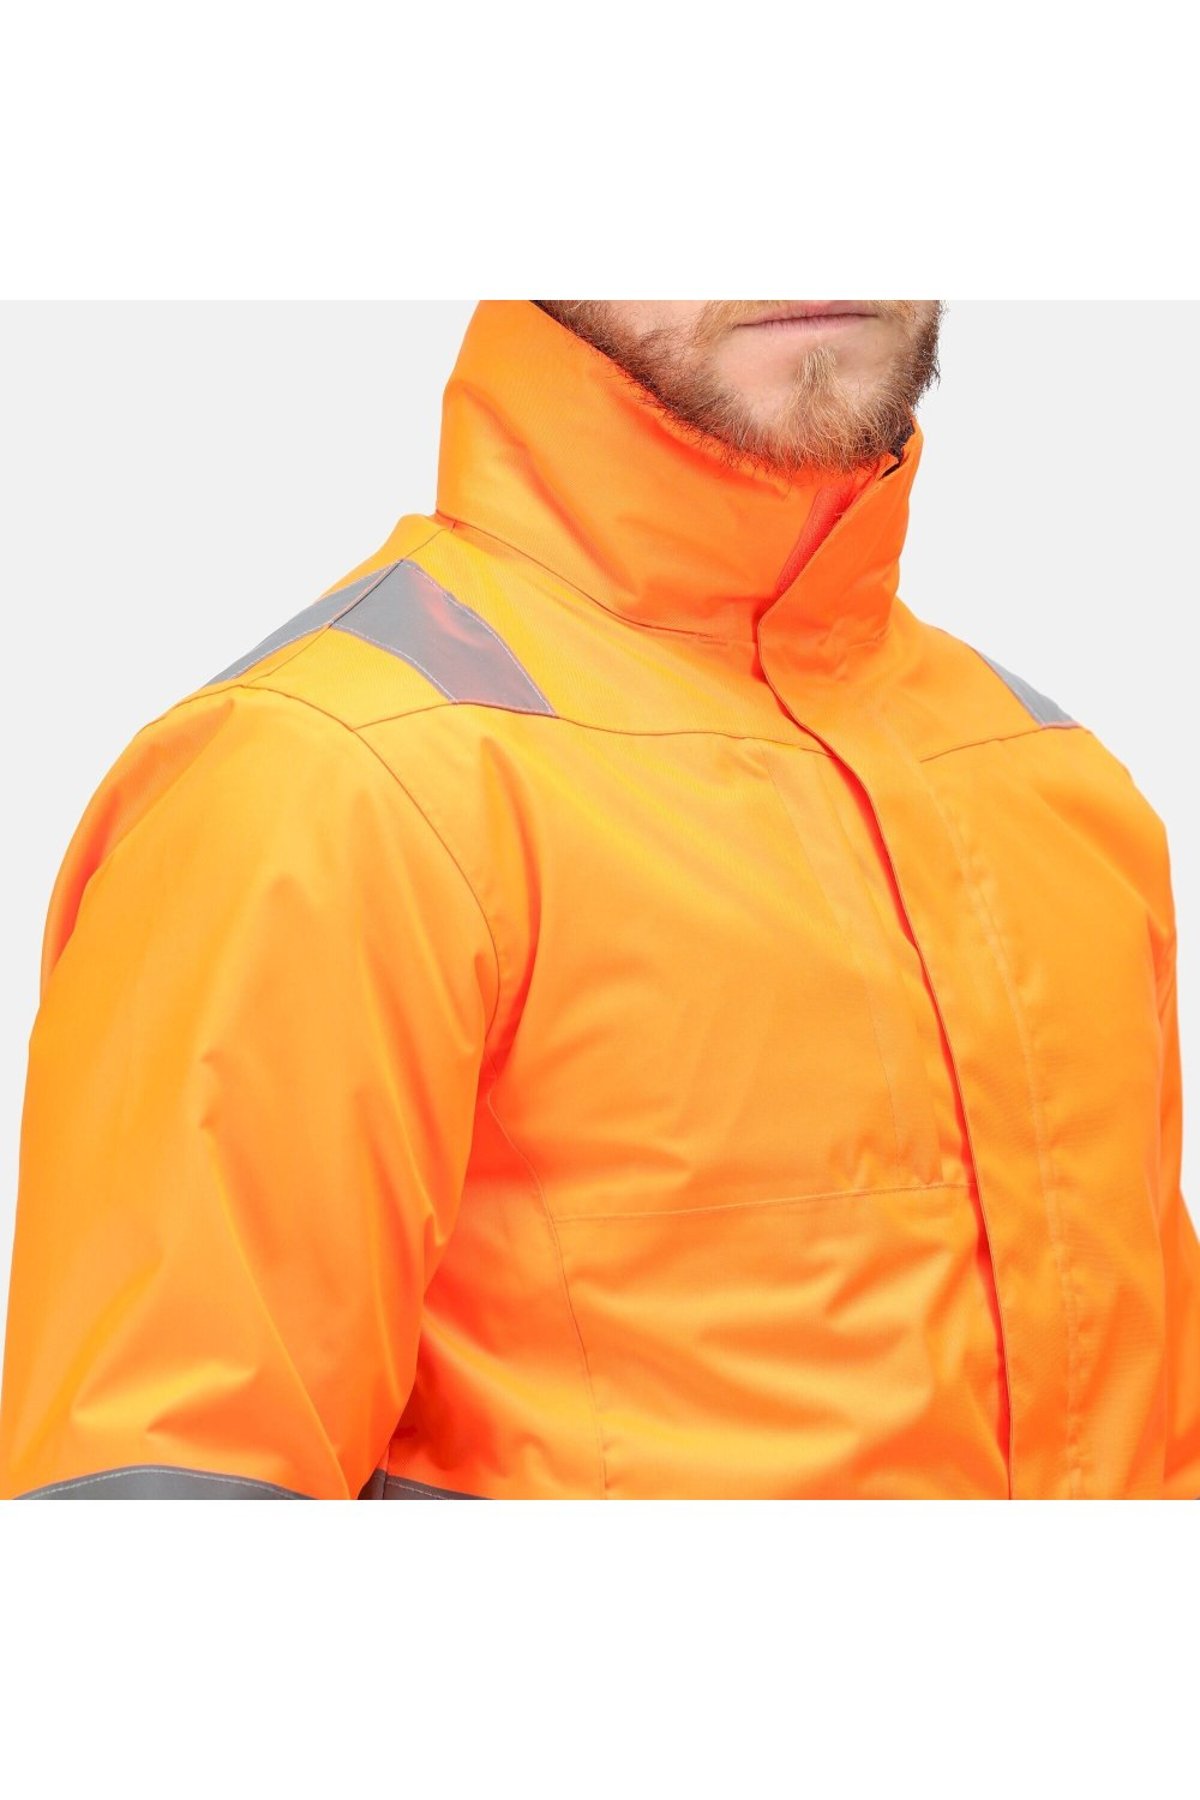 Regatta Professional Mens Pro Hi Vis 3 in 1 Jacket Orange/Navy